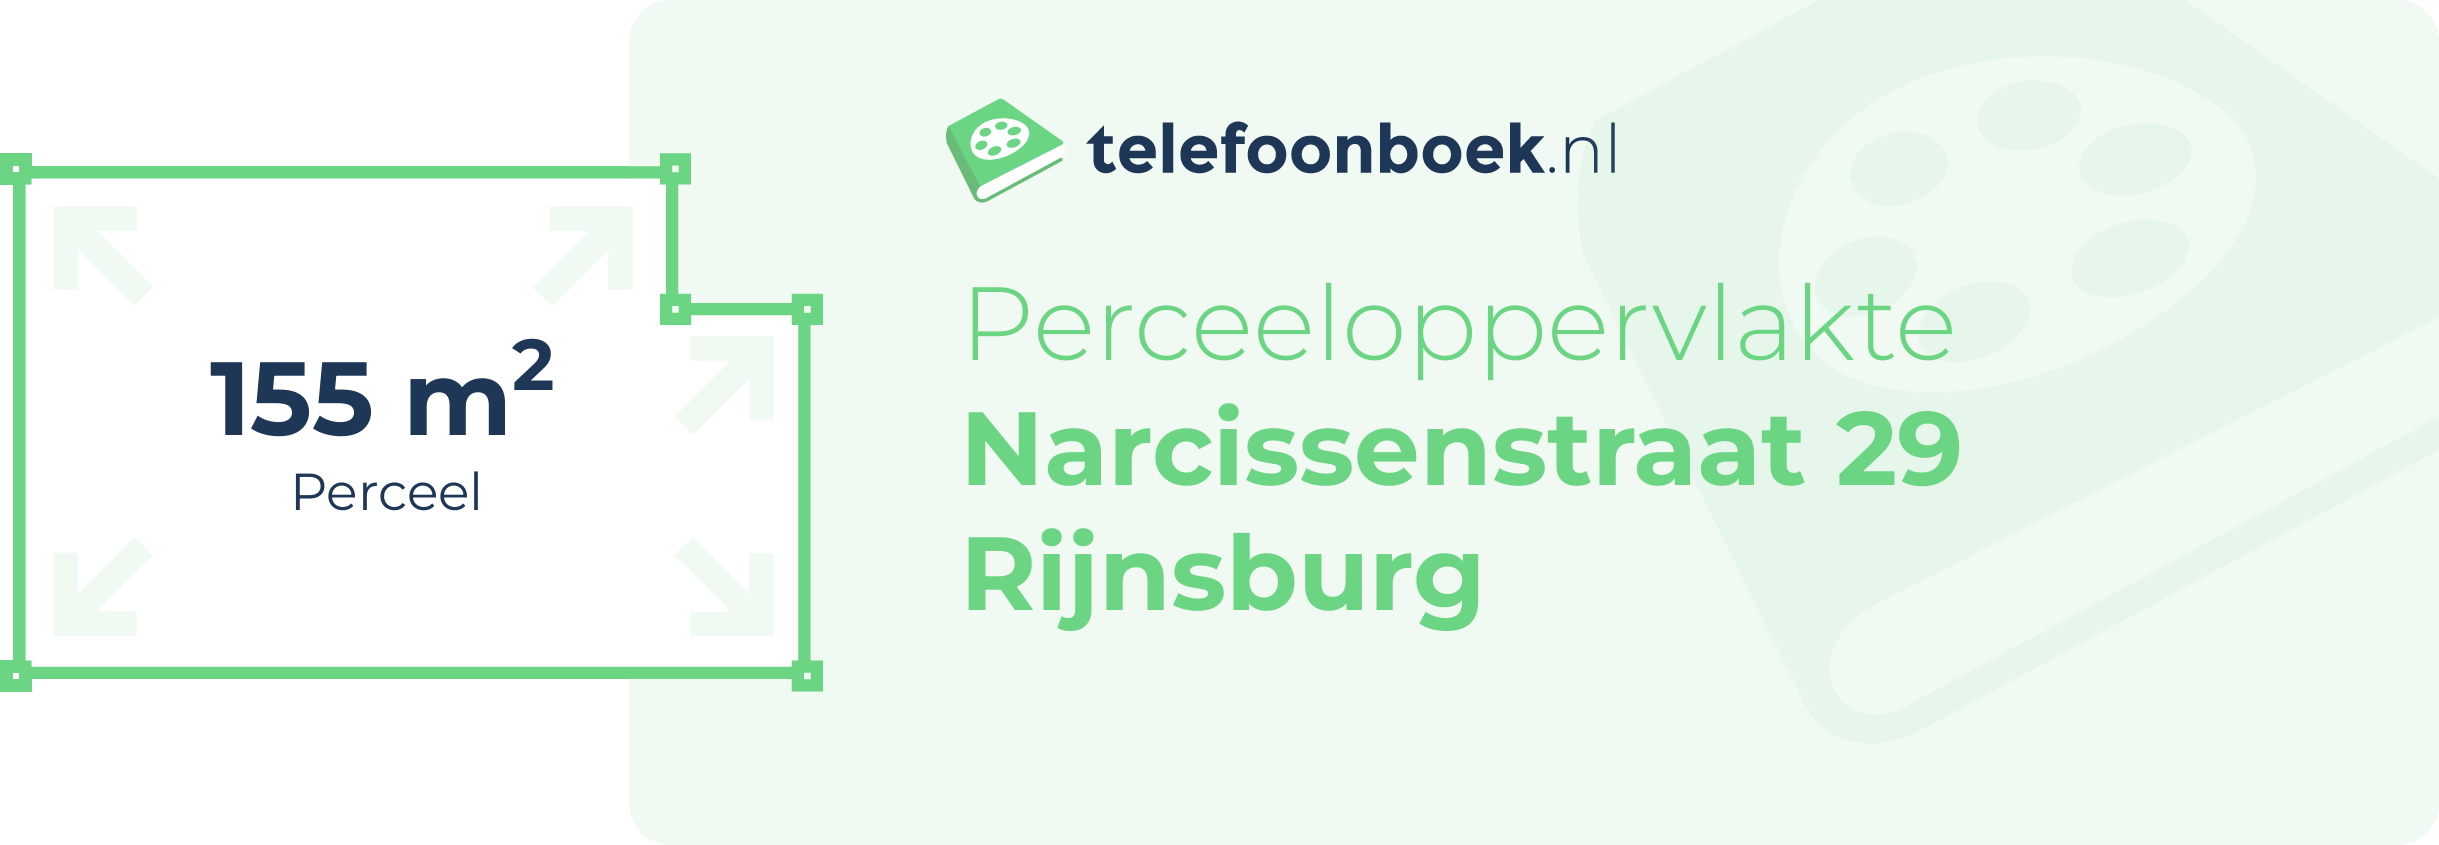 Perceeloppervlakte Narcissenstraat 29 Rijnsburg